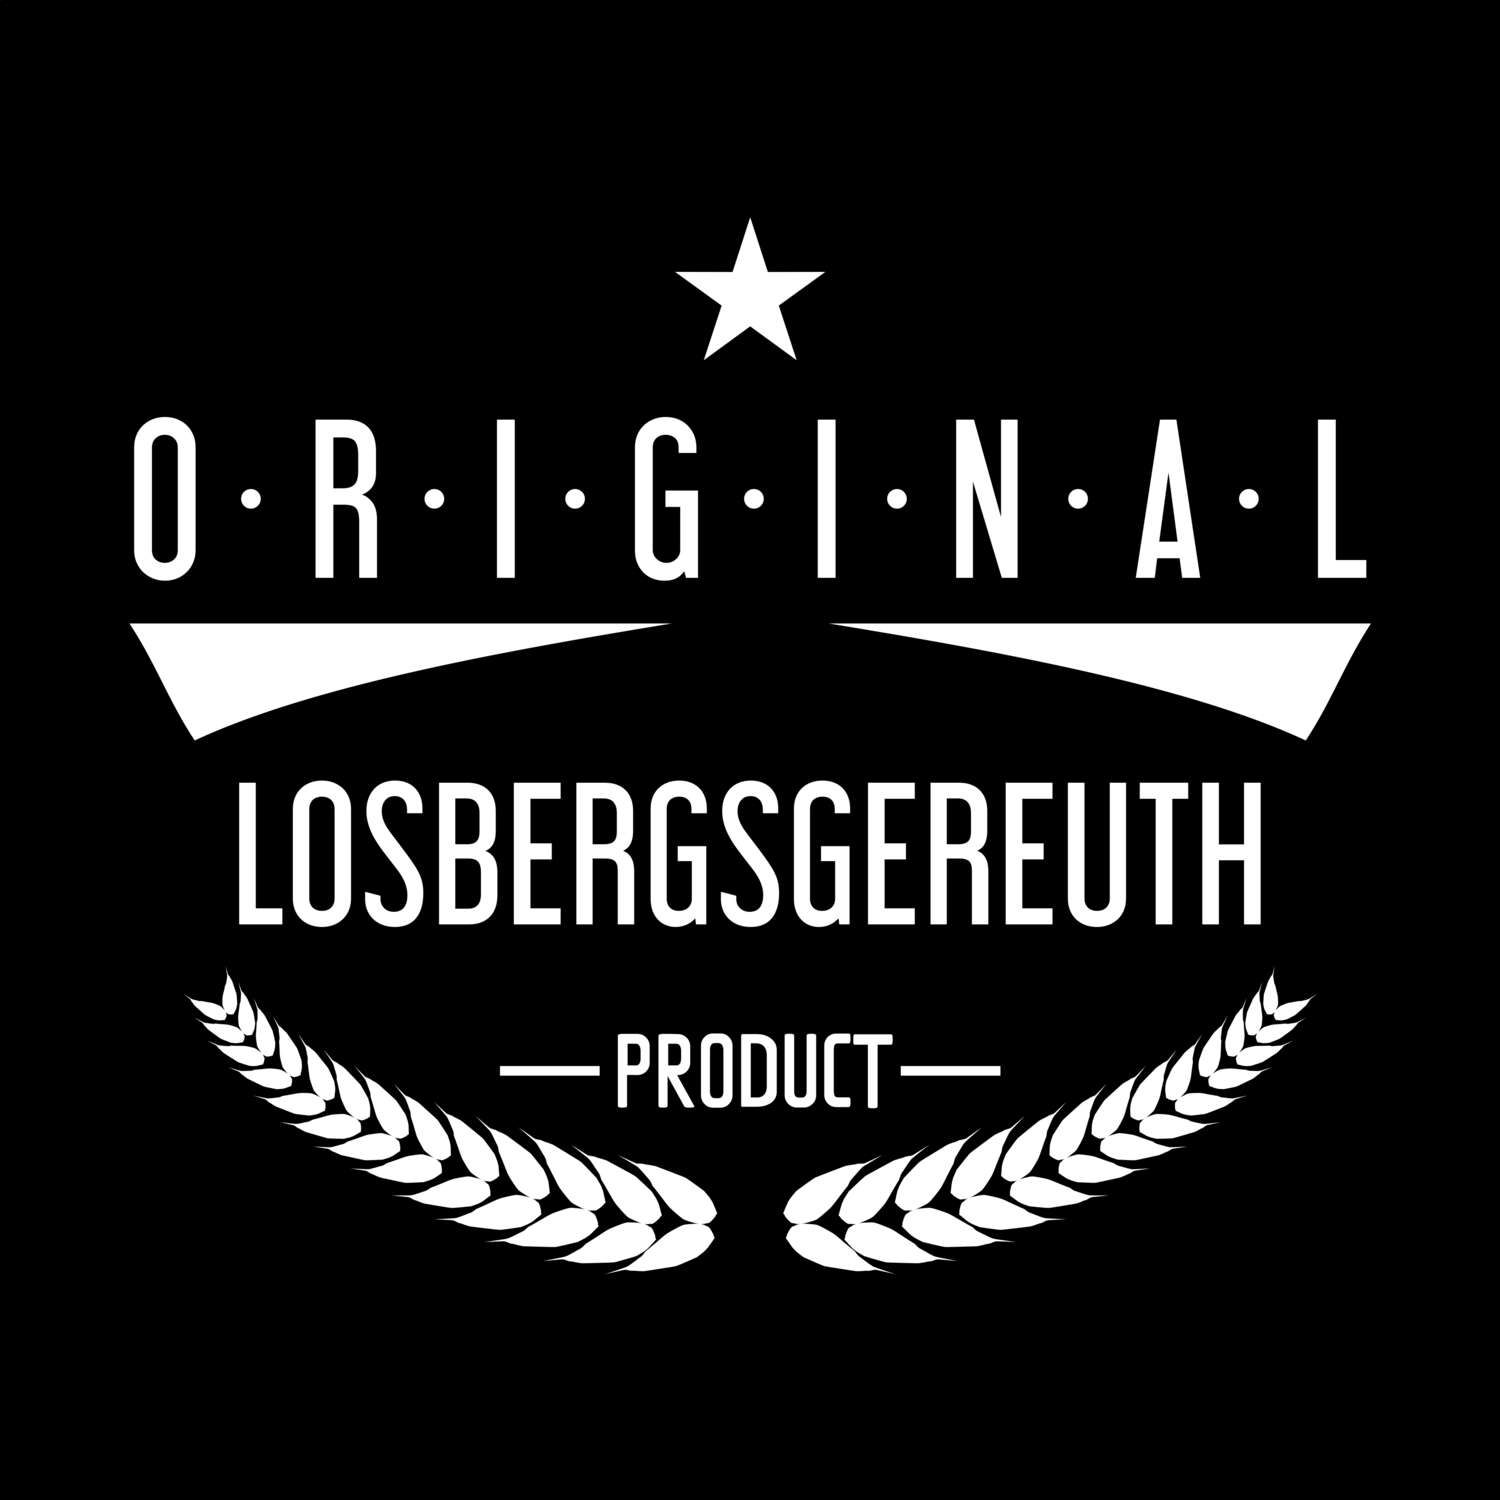 Losbergsgereuth T-Shirt »Original Product«